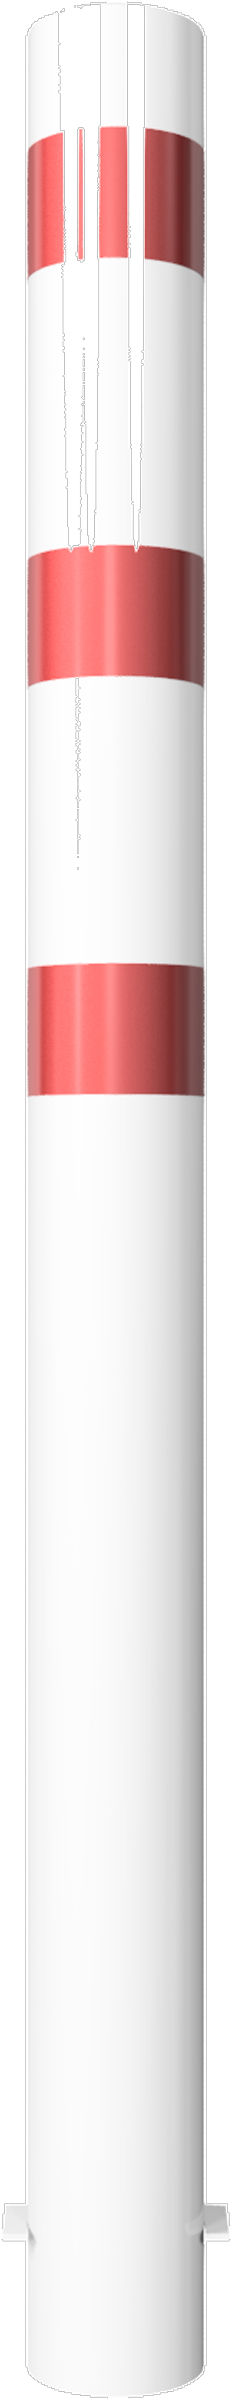 Schake Stahlrohrpoller OE Ø 152 mm weiß | rot - 2,00 m